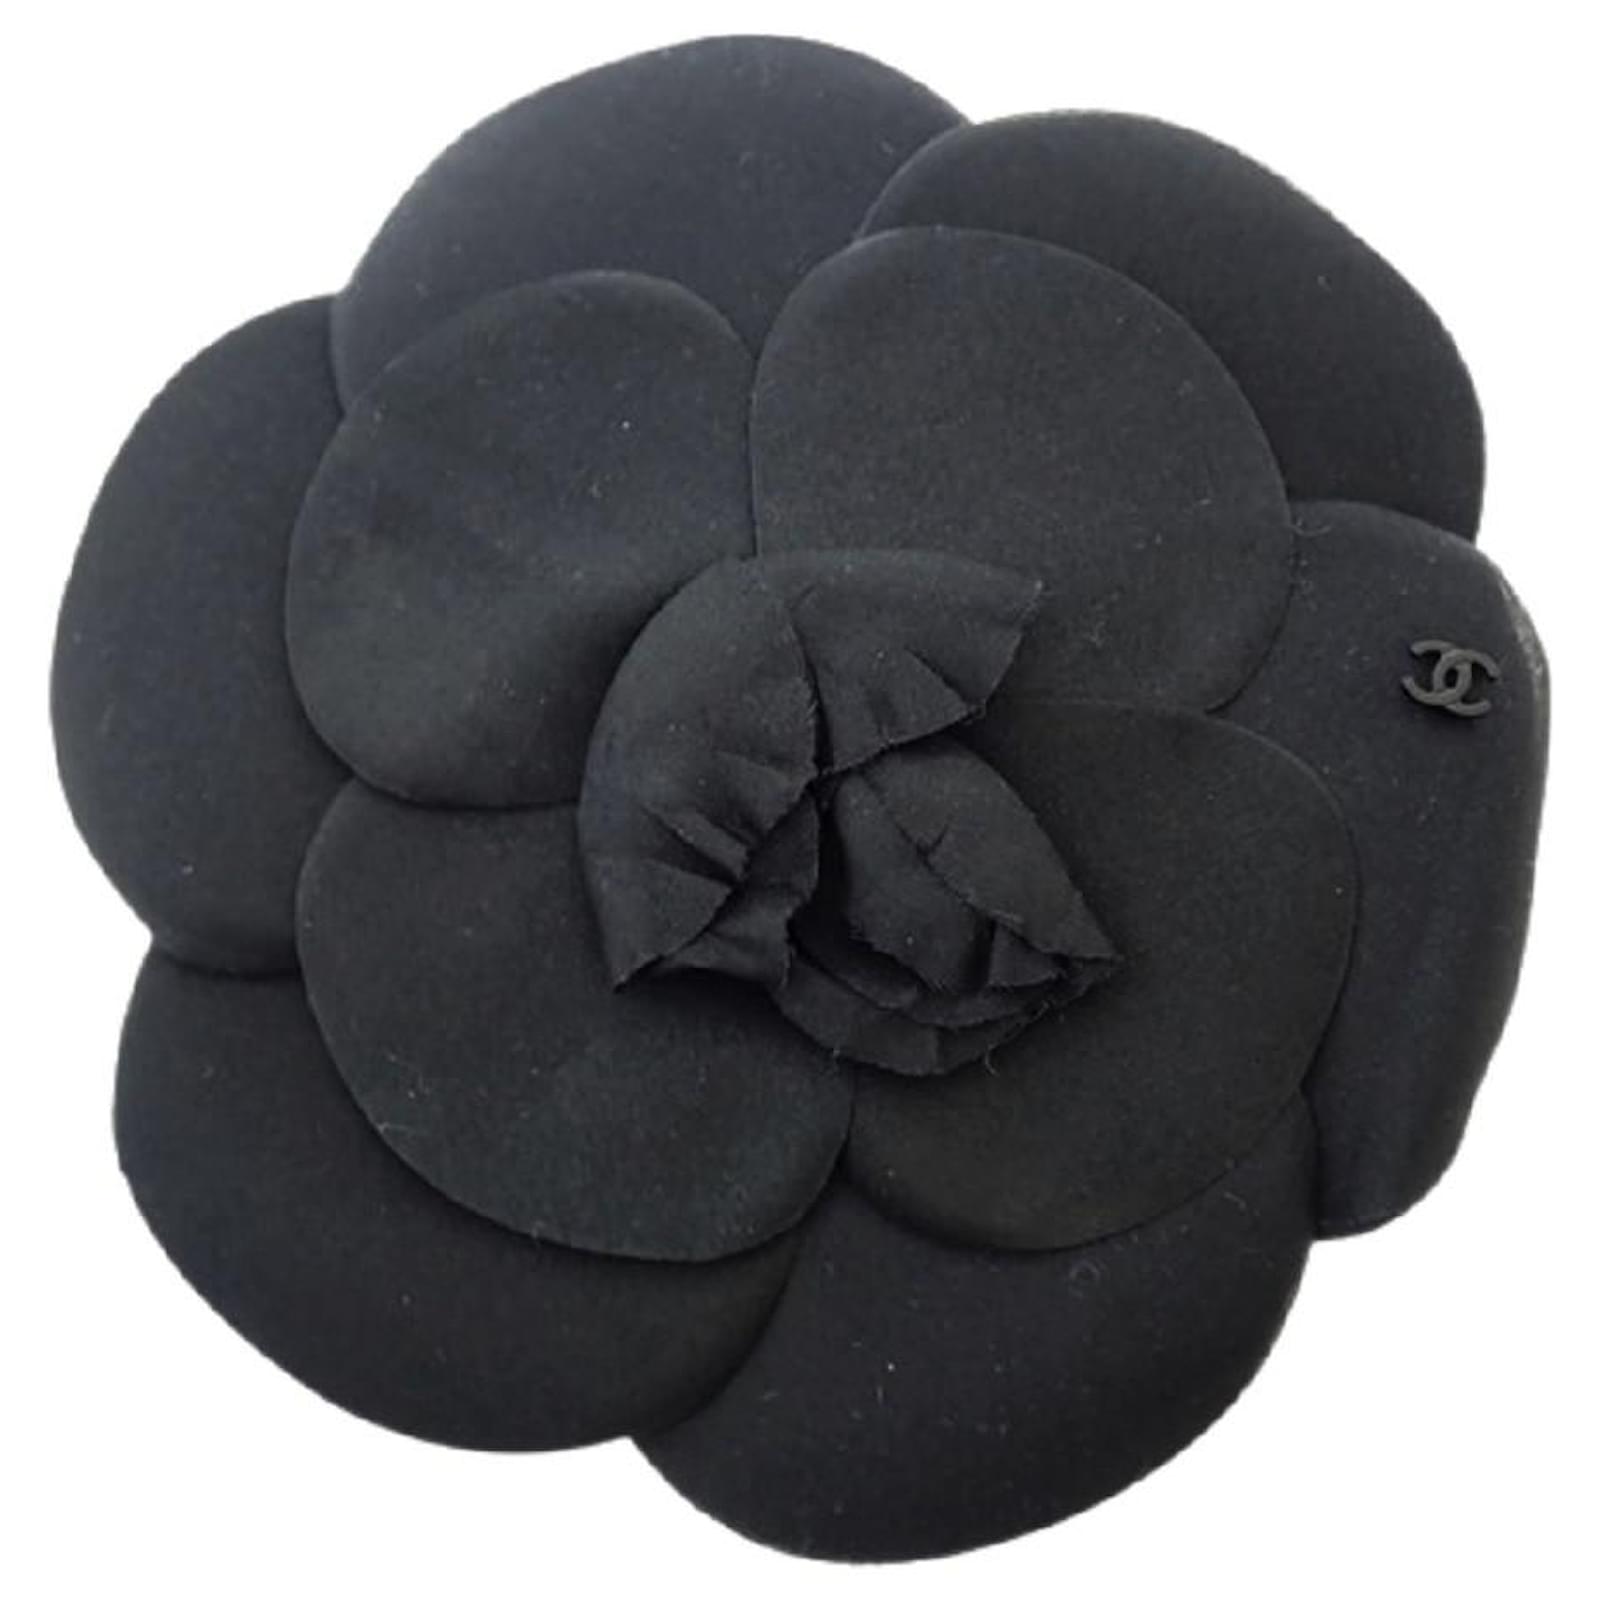 Chanel Camellia Bow Brooch - Black, Gold-Tone Metal - CHA65956